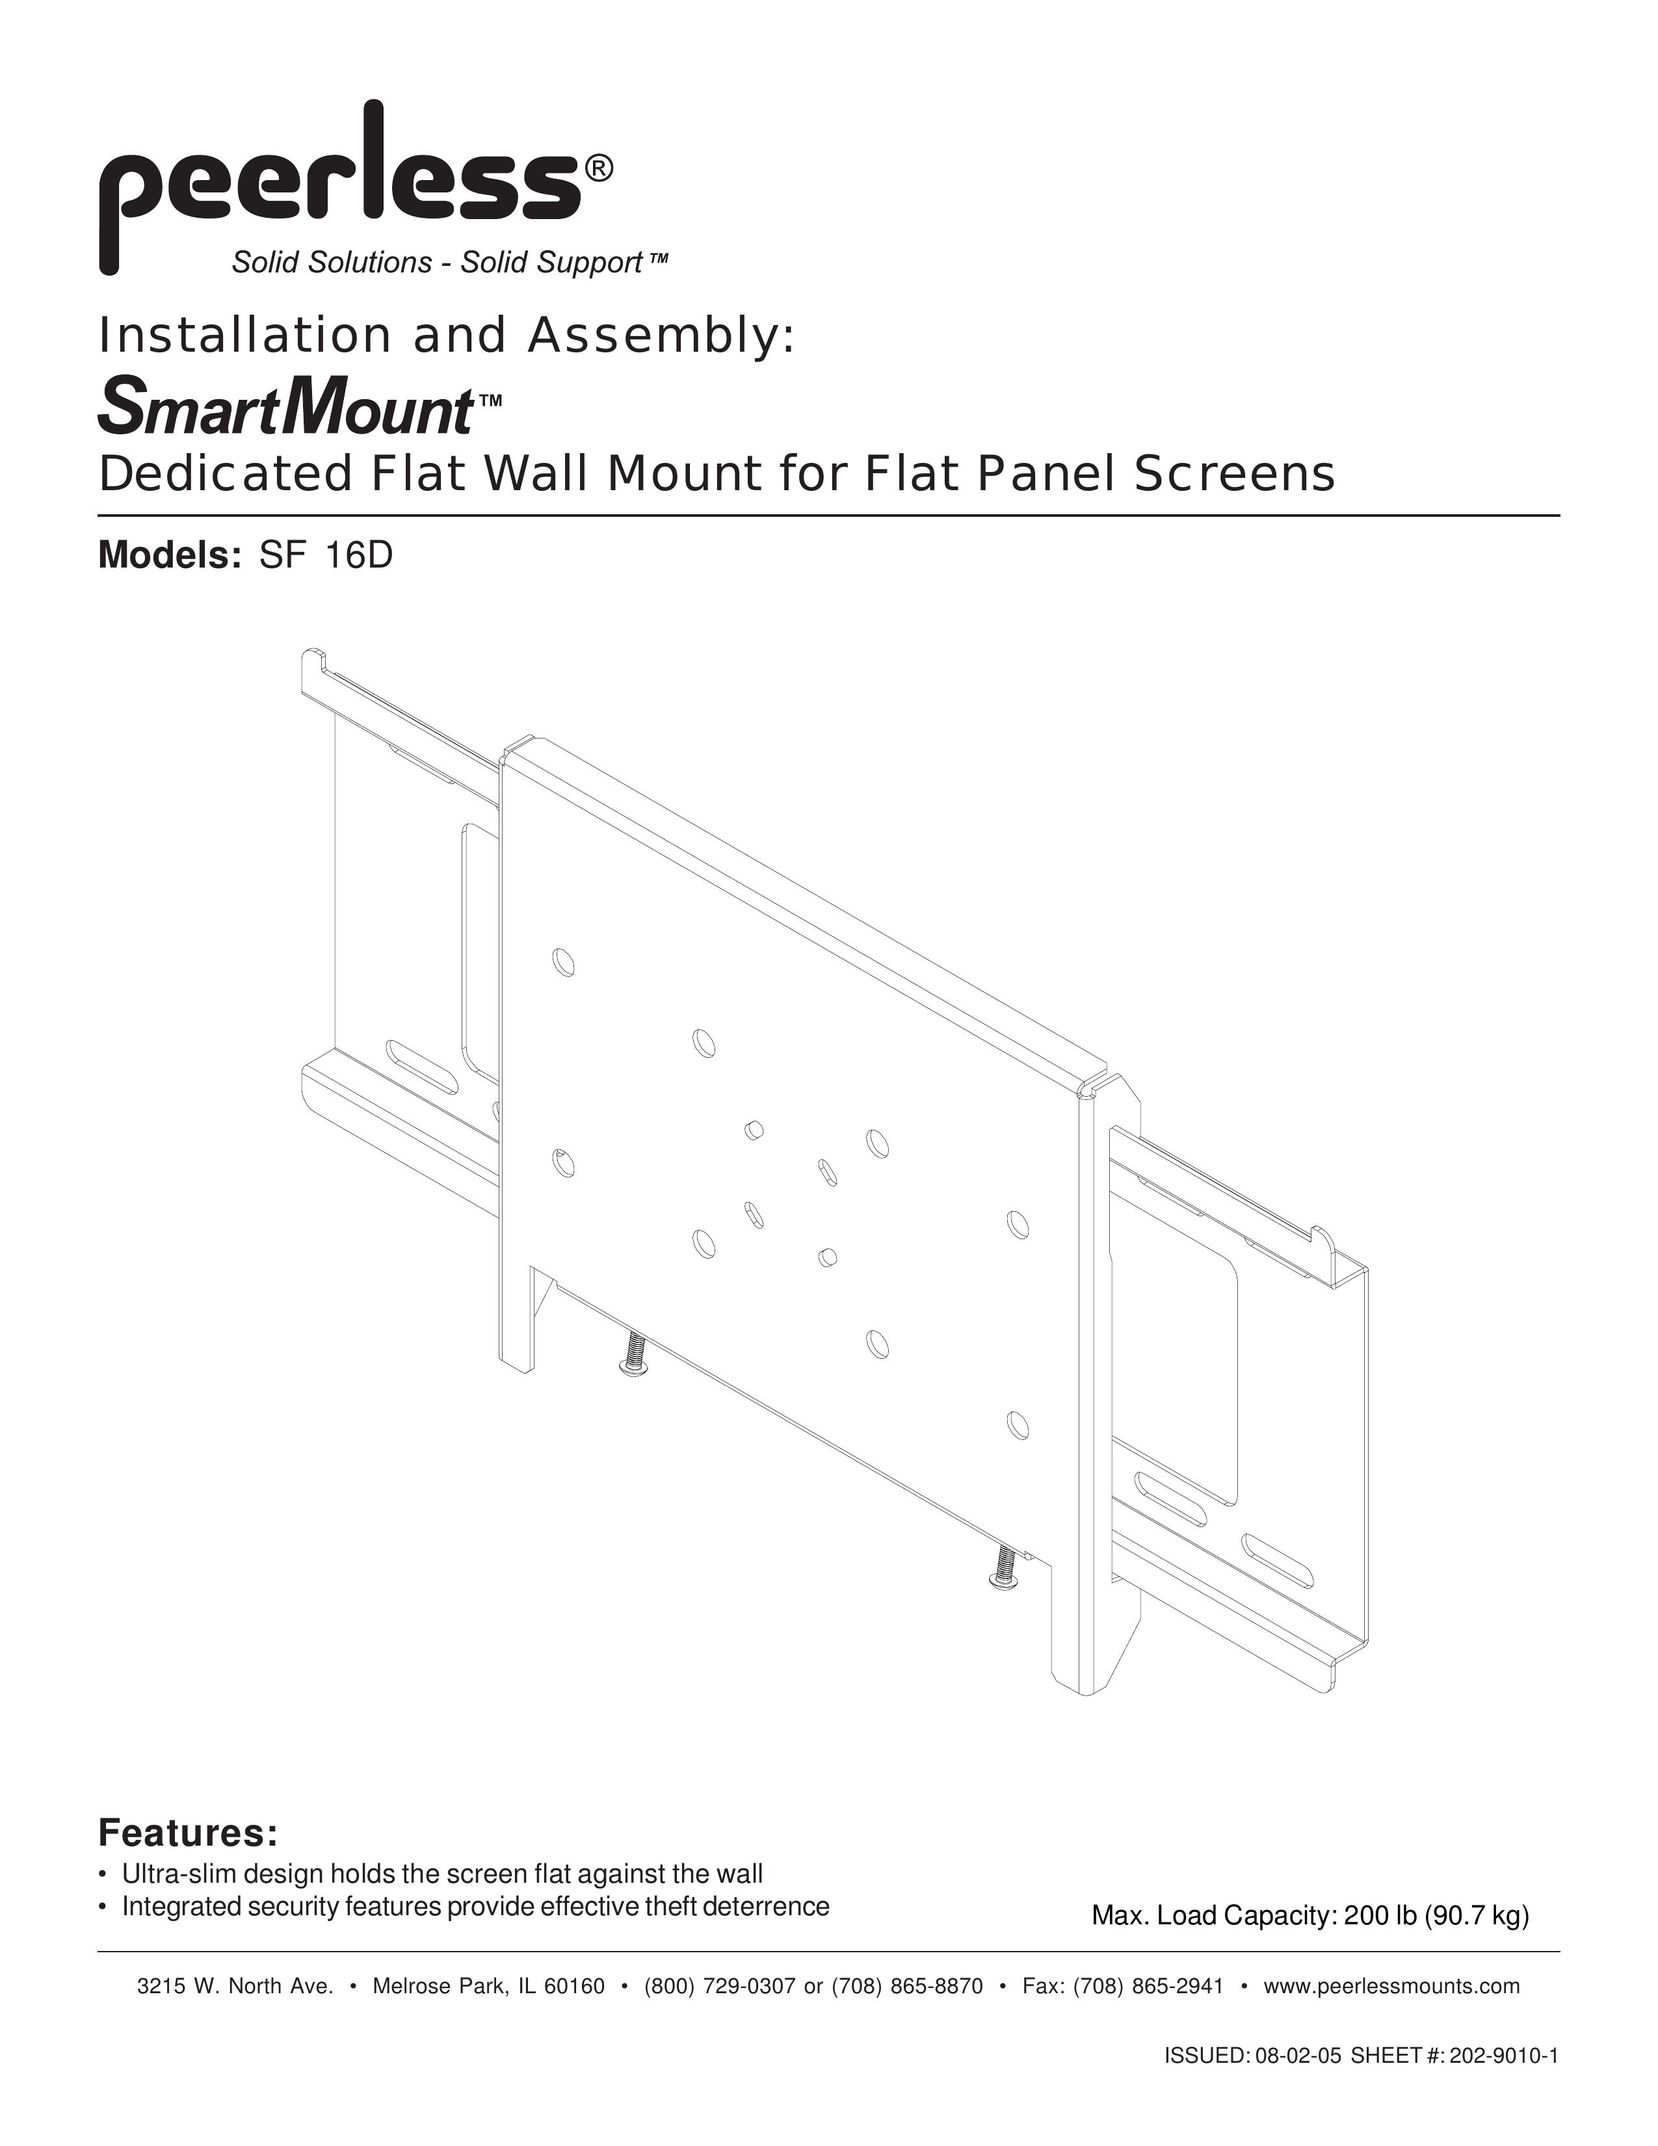 Peerless Industries SF 16D Flat Panel Television User Manual